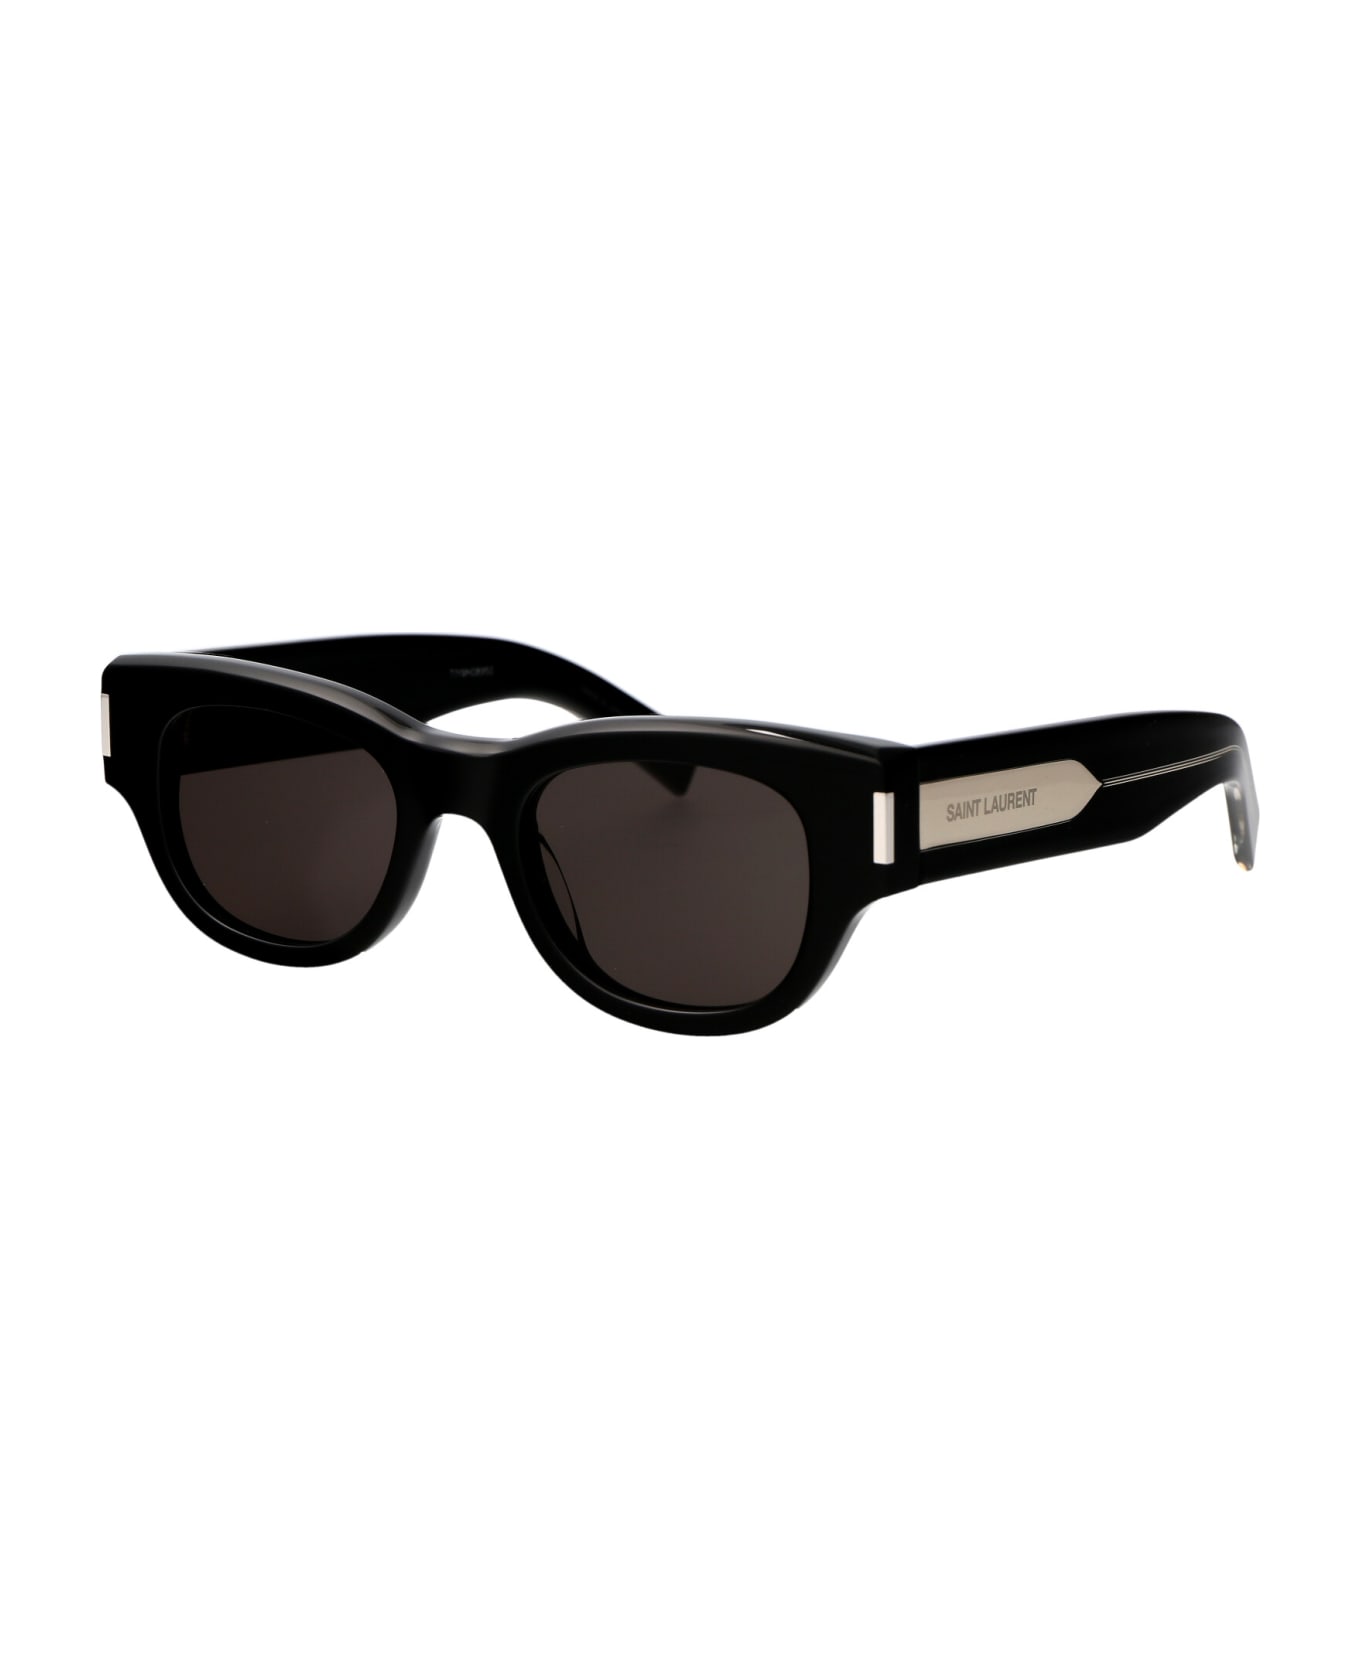 Saint Laurent Eyewear Sl 573 Sunglasses - 001 BLACK CRYSTAL GREY サングラス